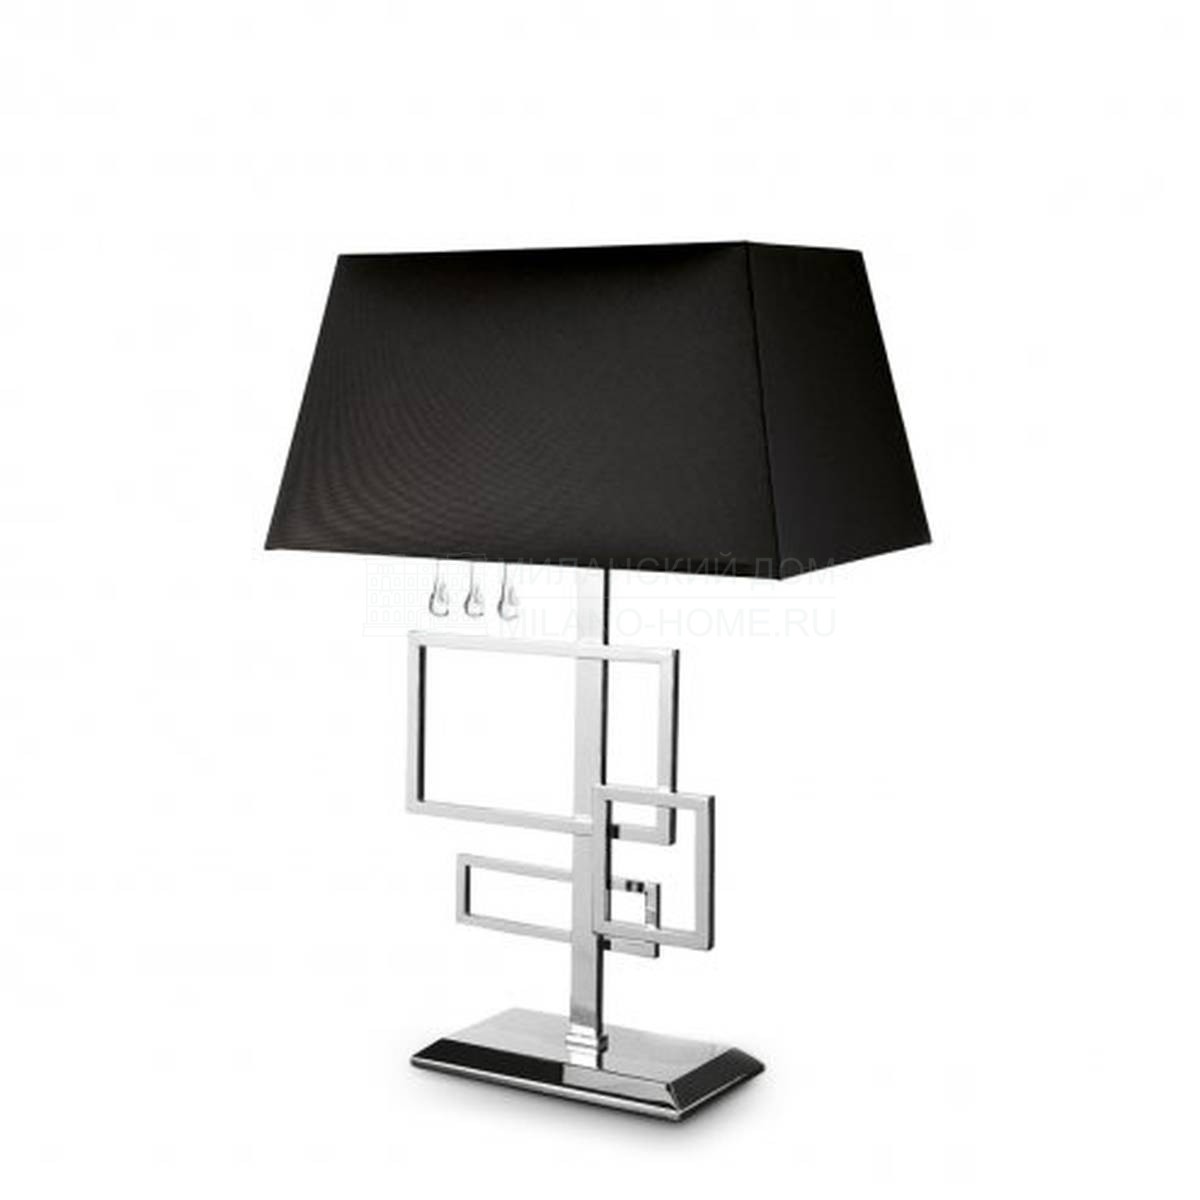 Настольная лампа Frame table lamp из Италии фабрики MARIONI